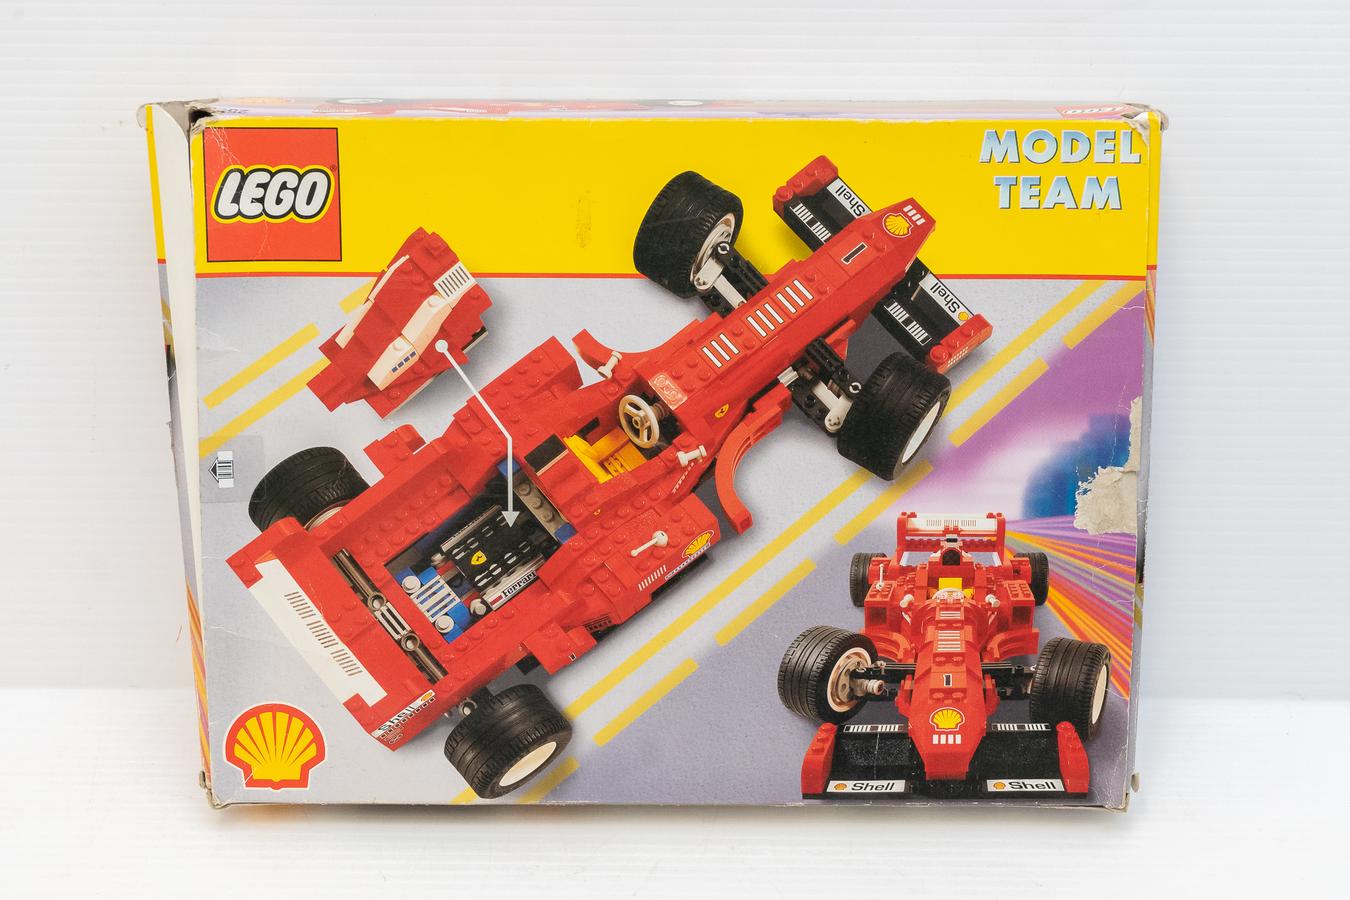 LEGO 2556 Model Team Ferrari Formula 1 Racing Car